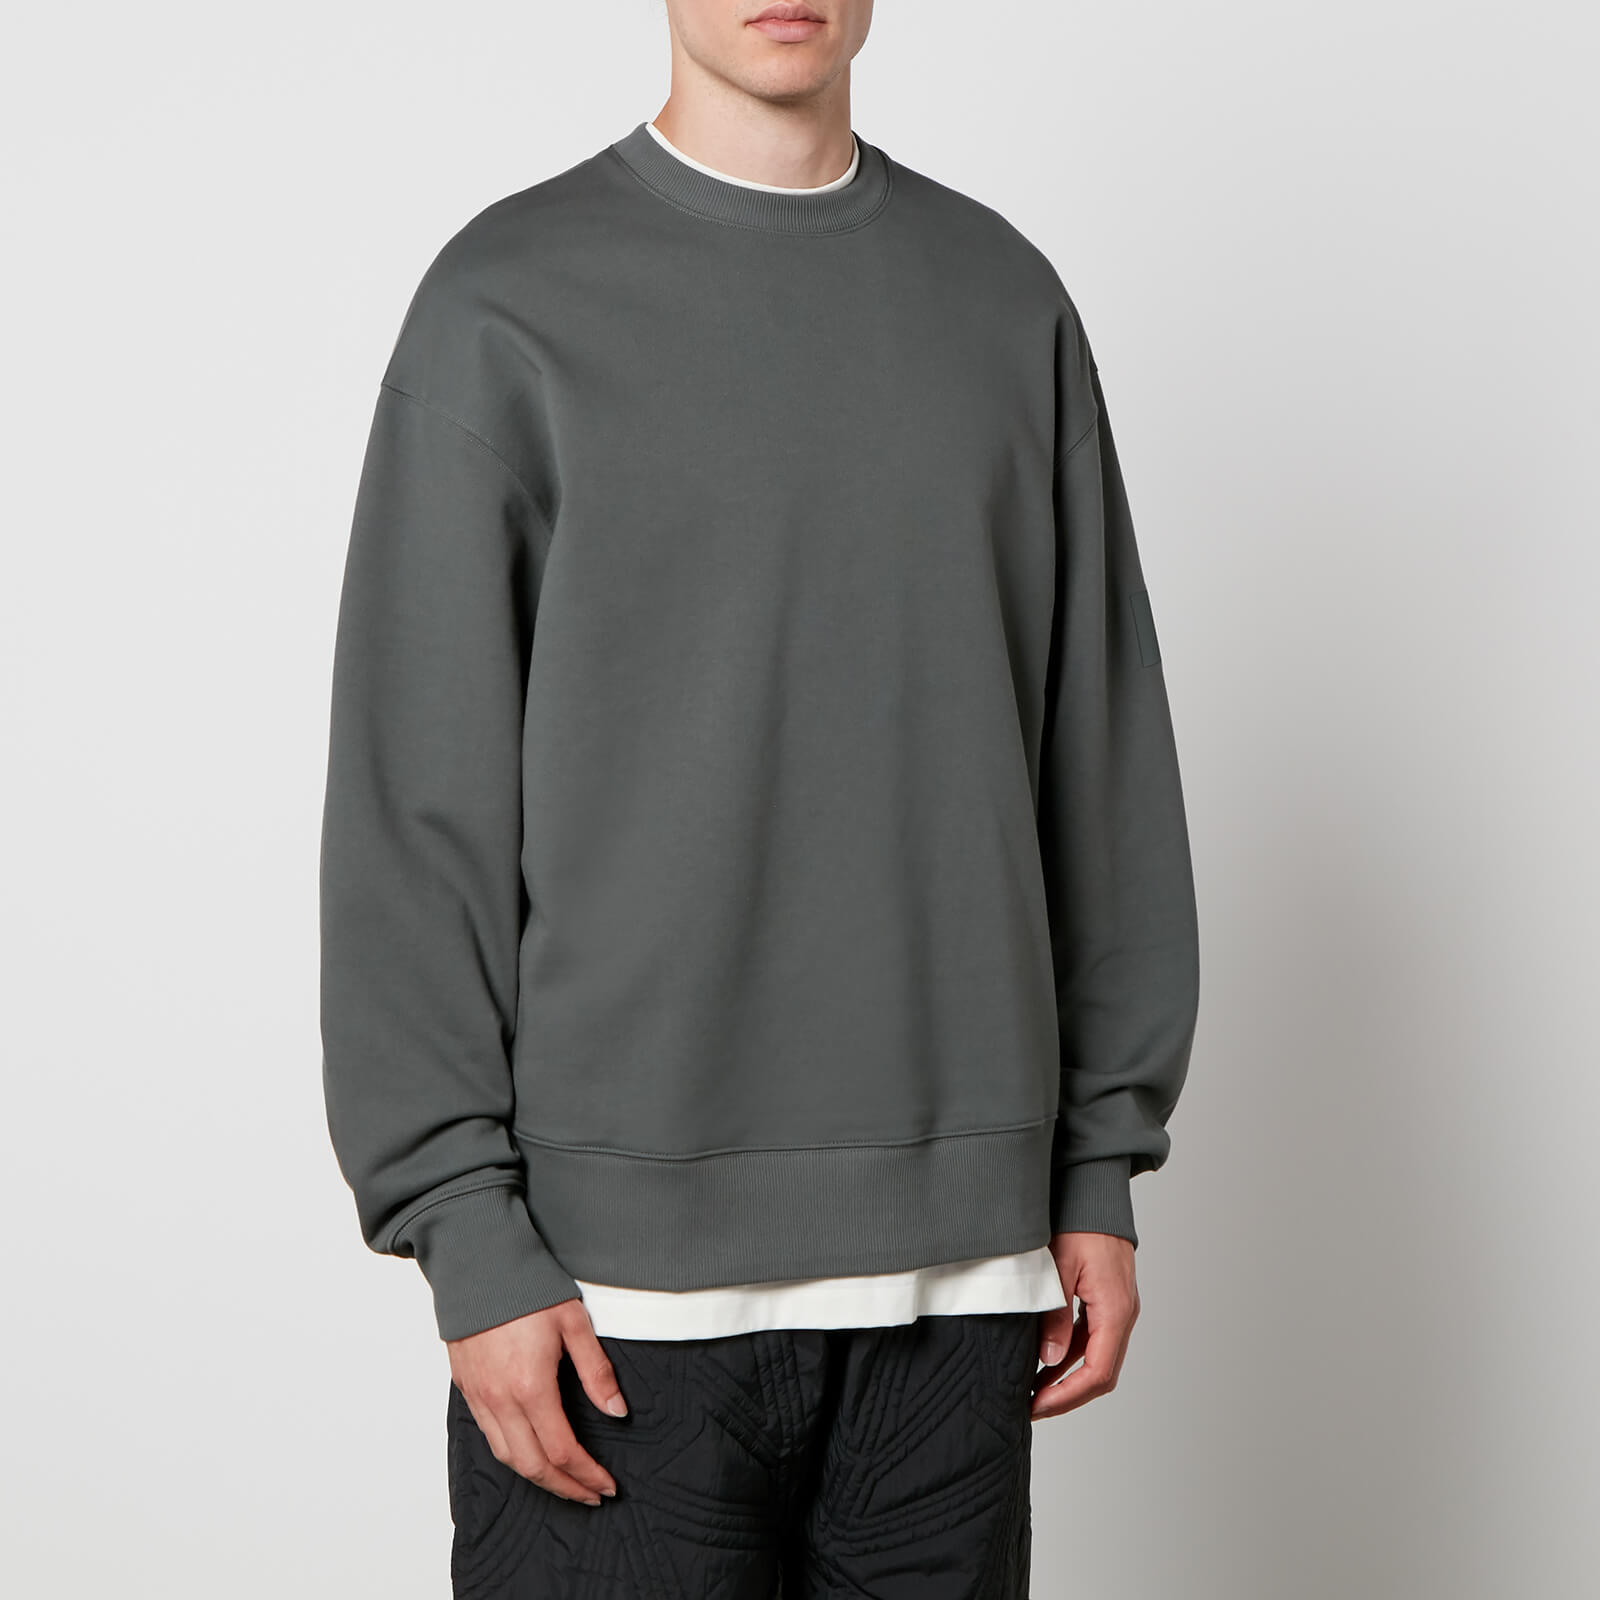 y-3 ft organic cotton sweatshirt - xl